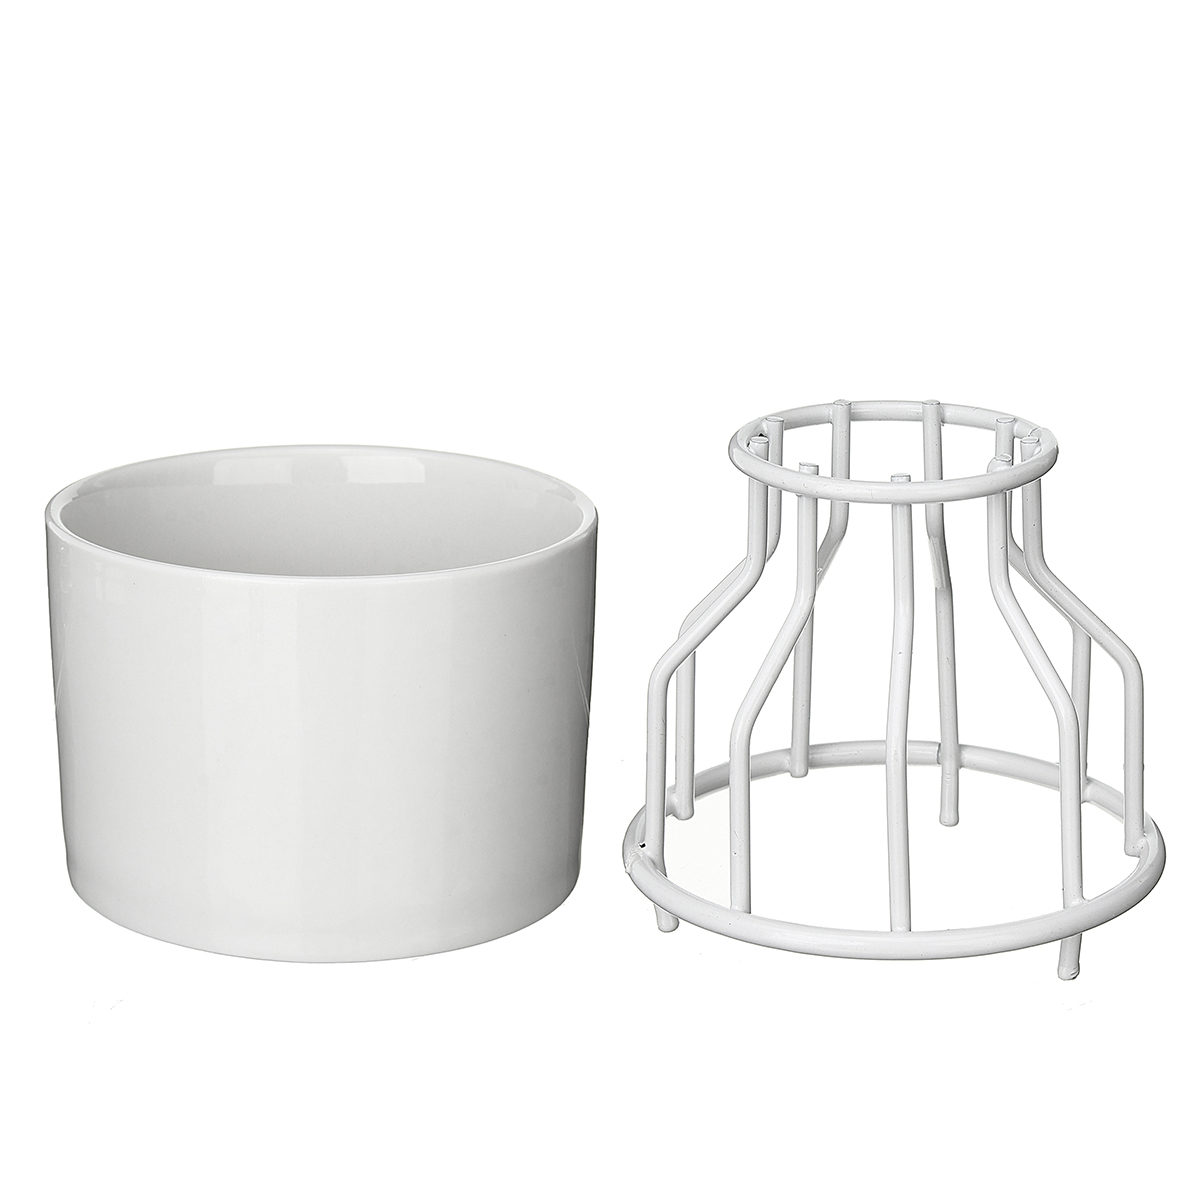 Ceramics-Vase-Simple-Iron-Frame-Hydroponics-Soil-Culture-Green-Radish-Insert-Flower-Pot-1457360-9